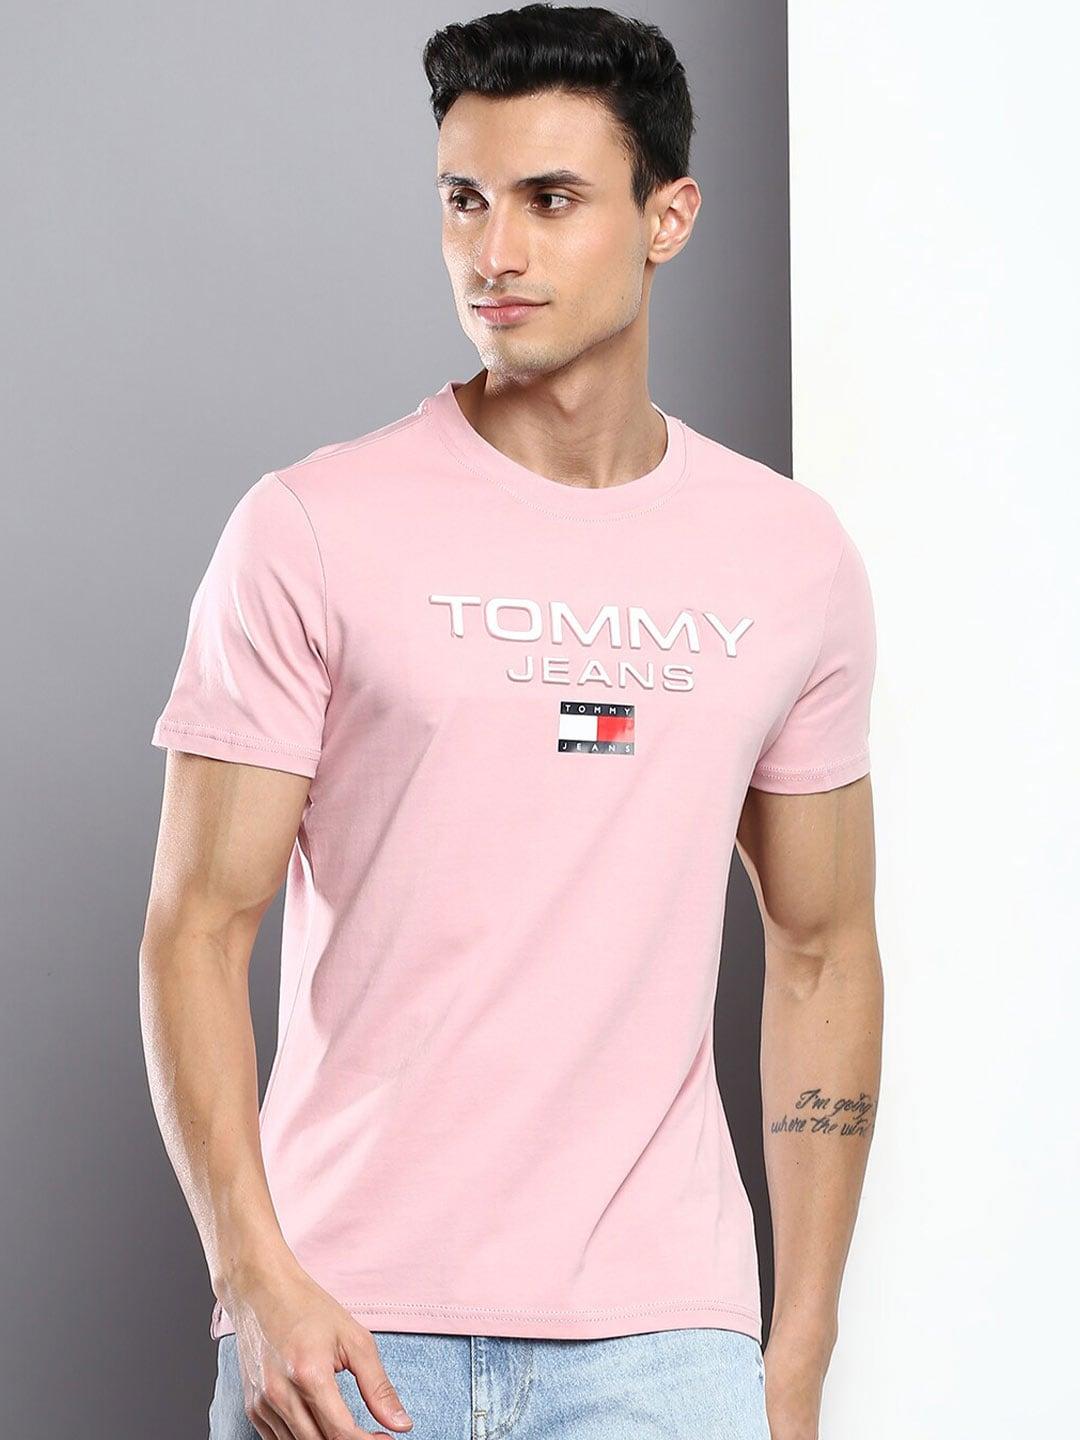 Tommy Hilfiger Men Brand Logo Printed Slim Fit T-shirt